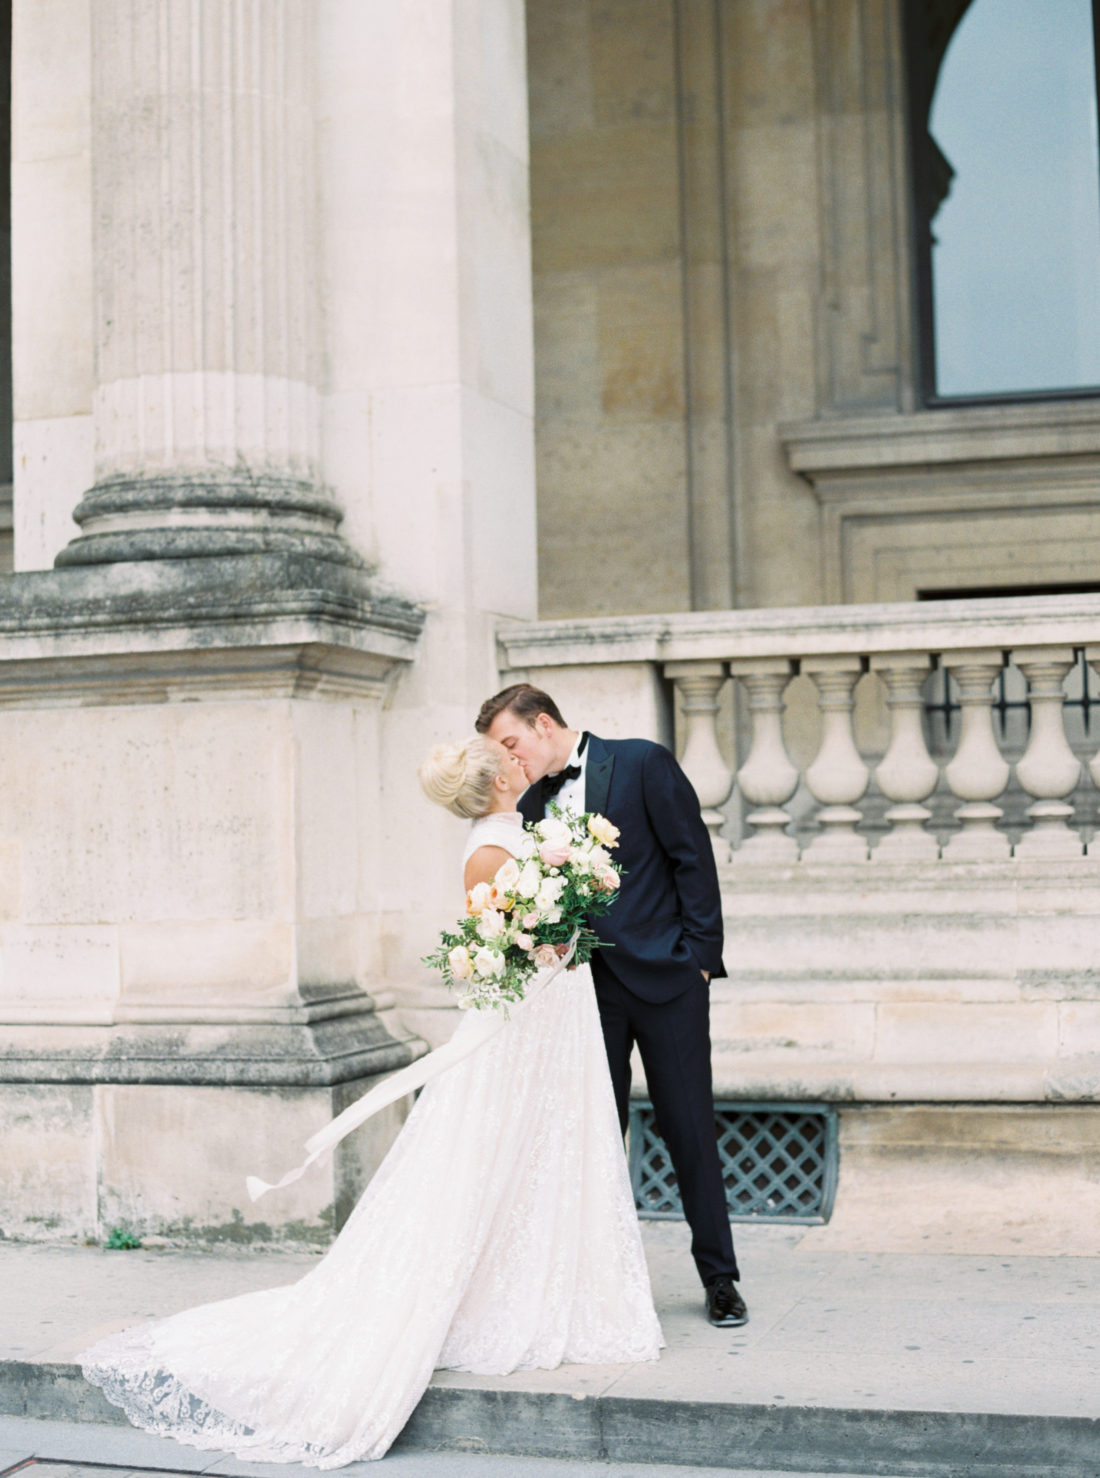 paris wedding planner rachael ellen events tips post photo 16